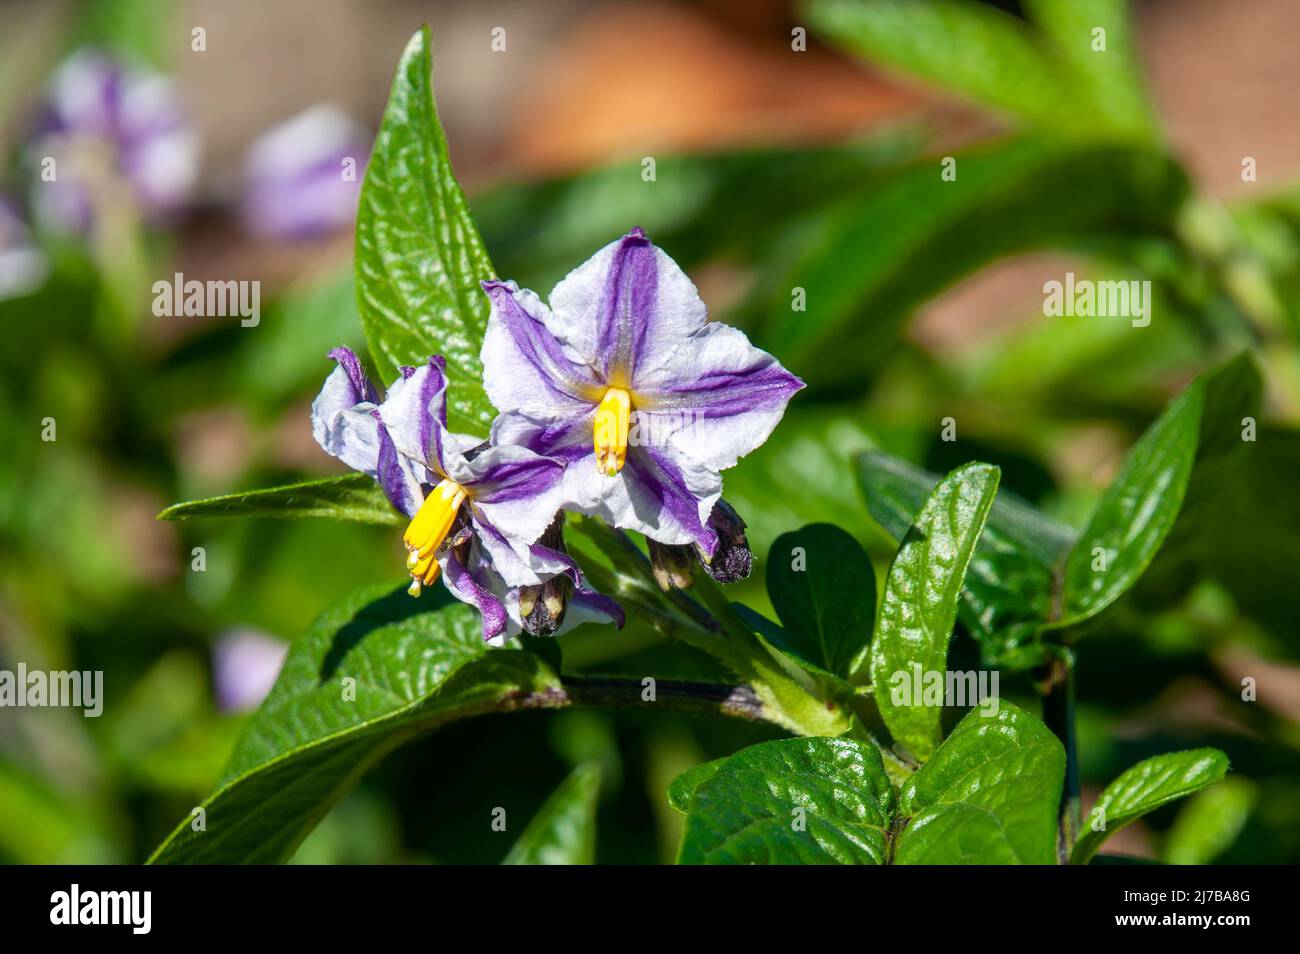 Sydney Australia, flowers of a Solanum muricatum or pepino melon plant Stock Photo